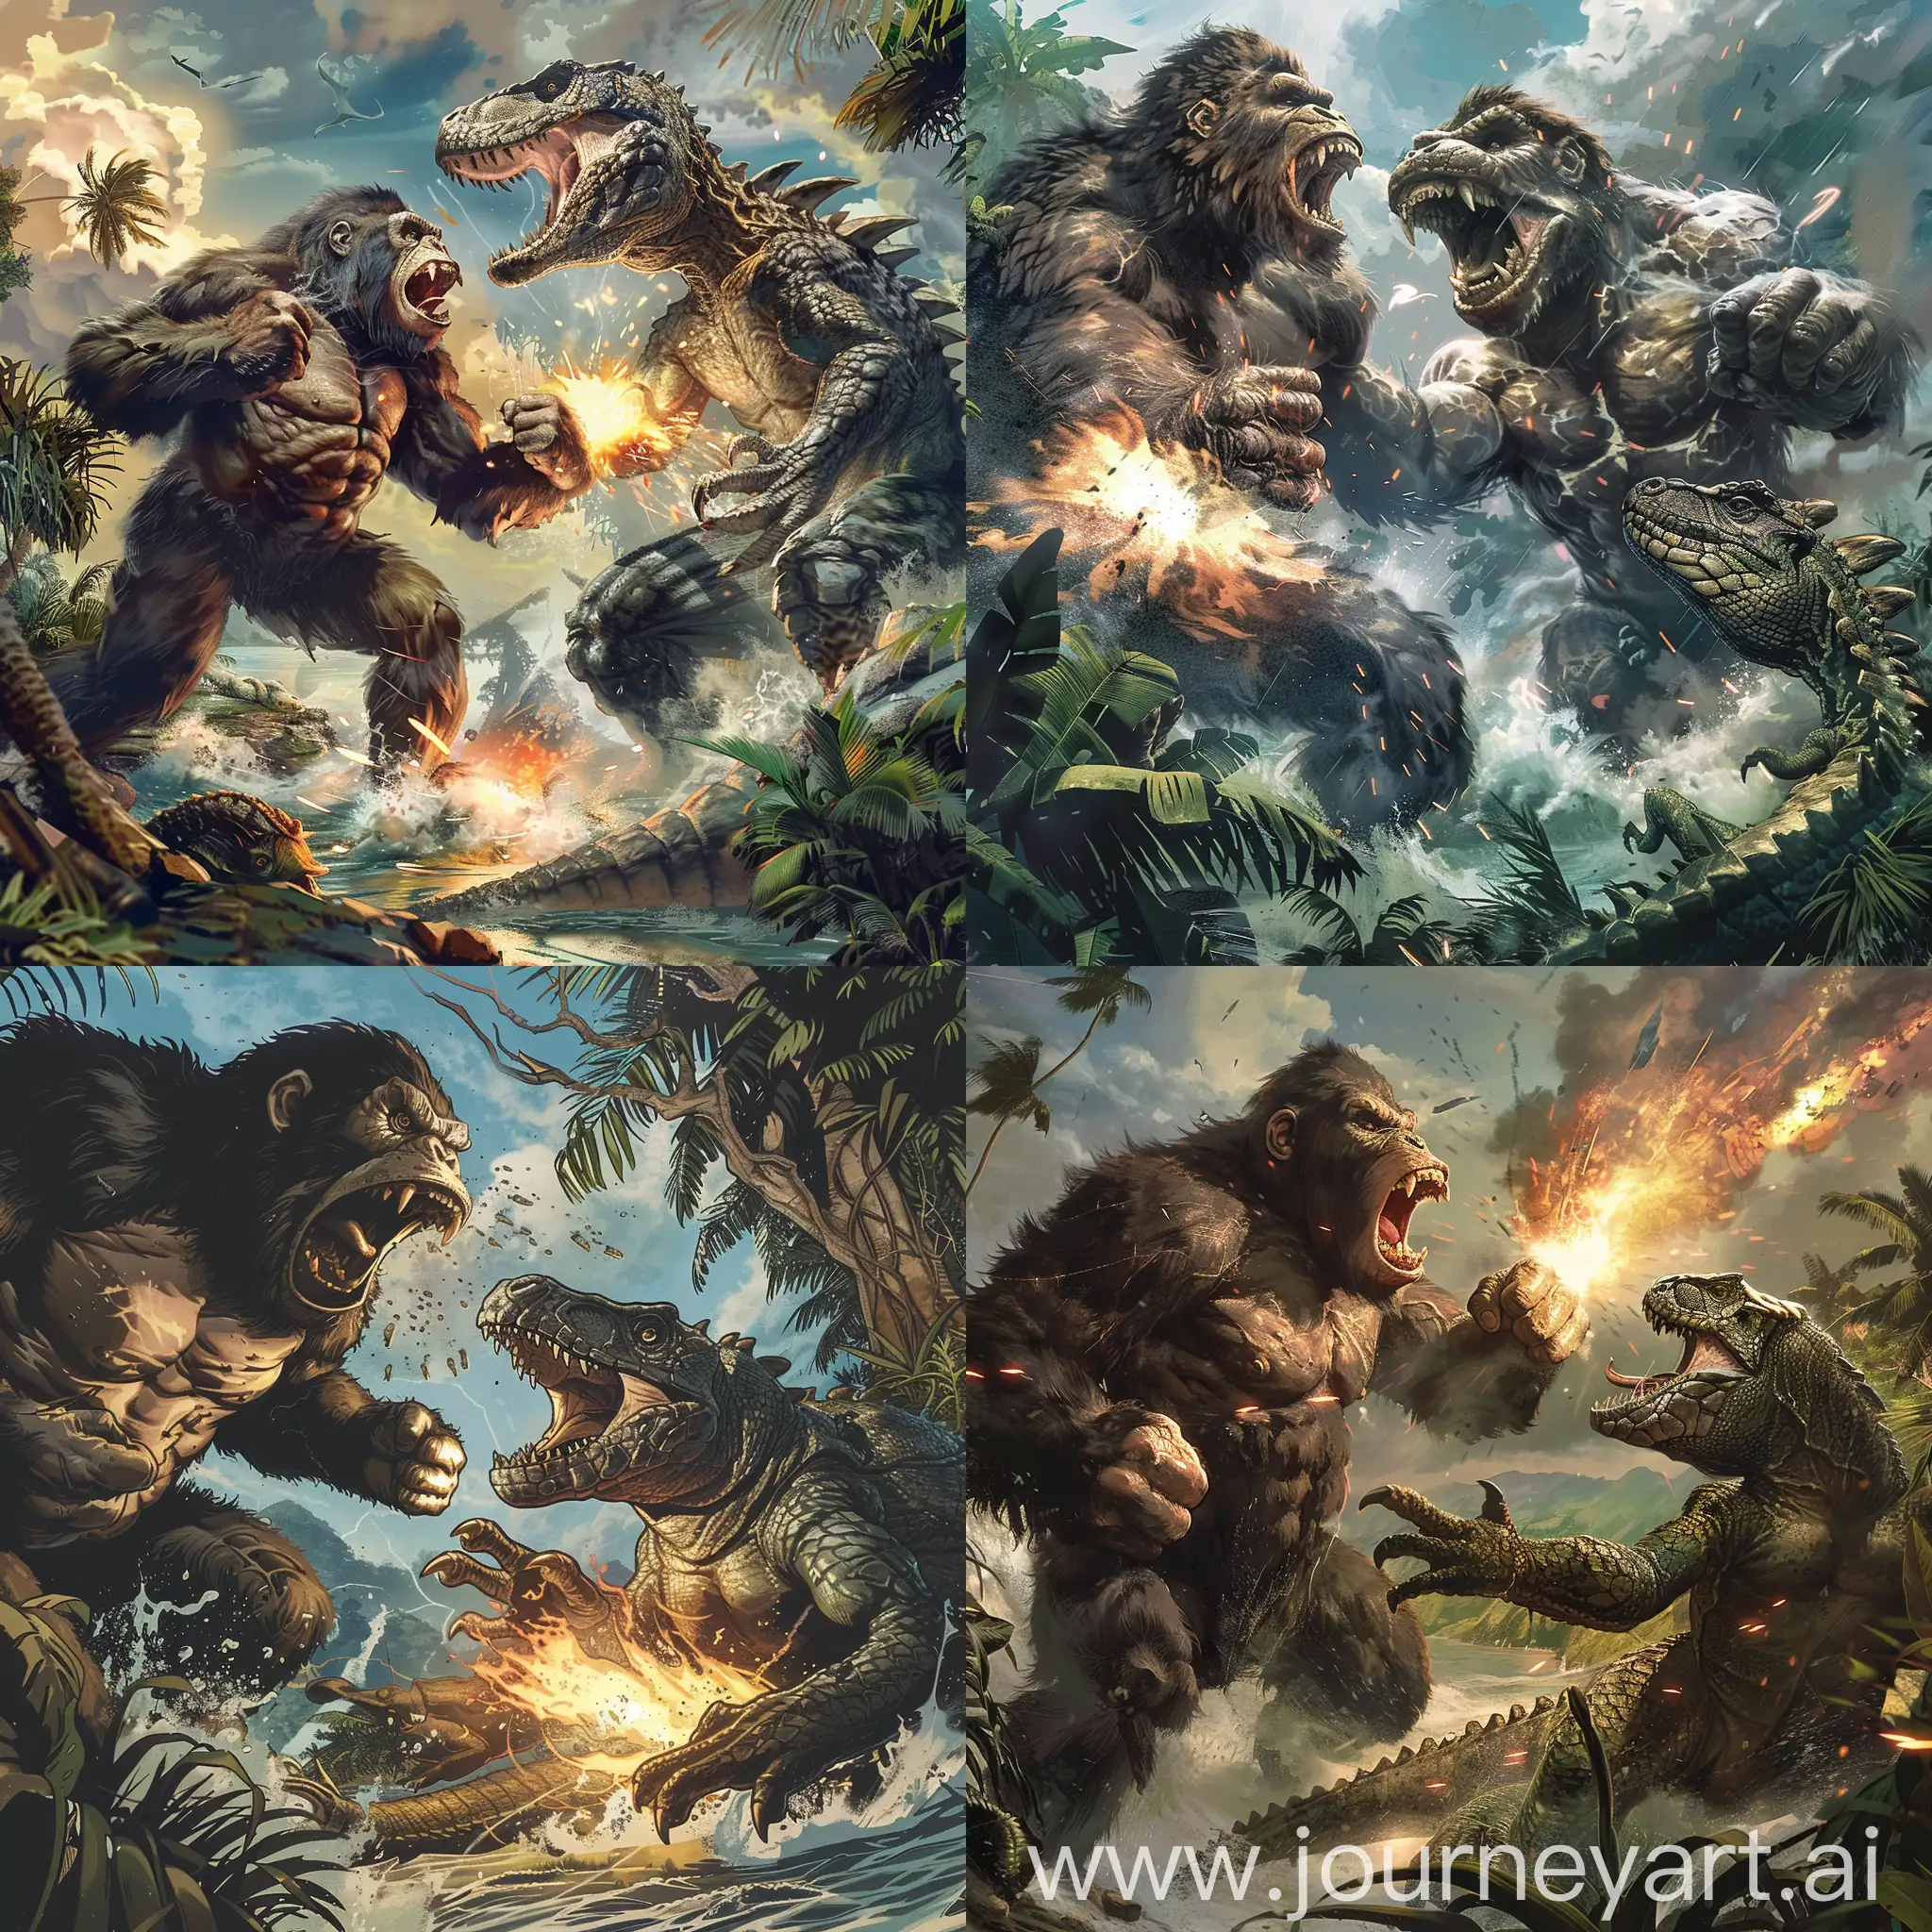 Epic-Battle-Giant-Ape-versus-Reptilian-Monster-in-EarthShaking-Clash